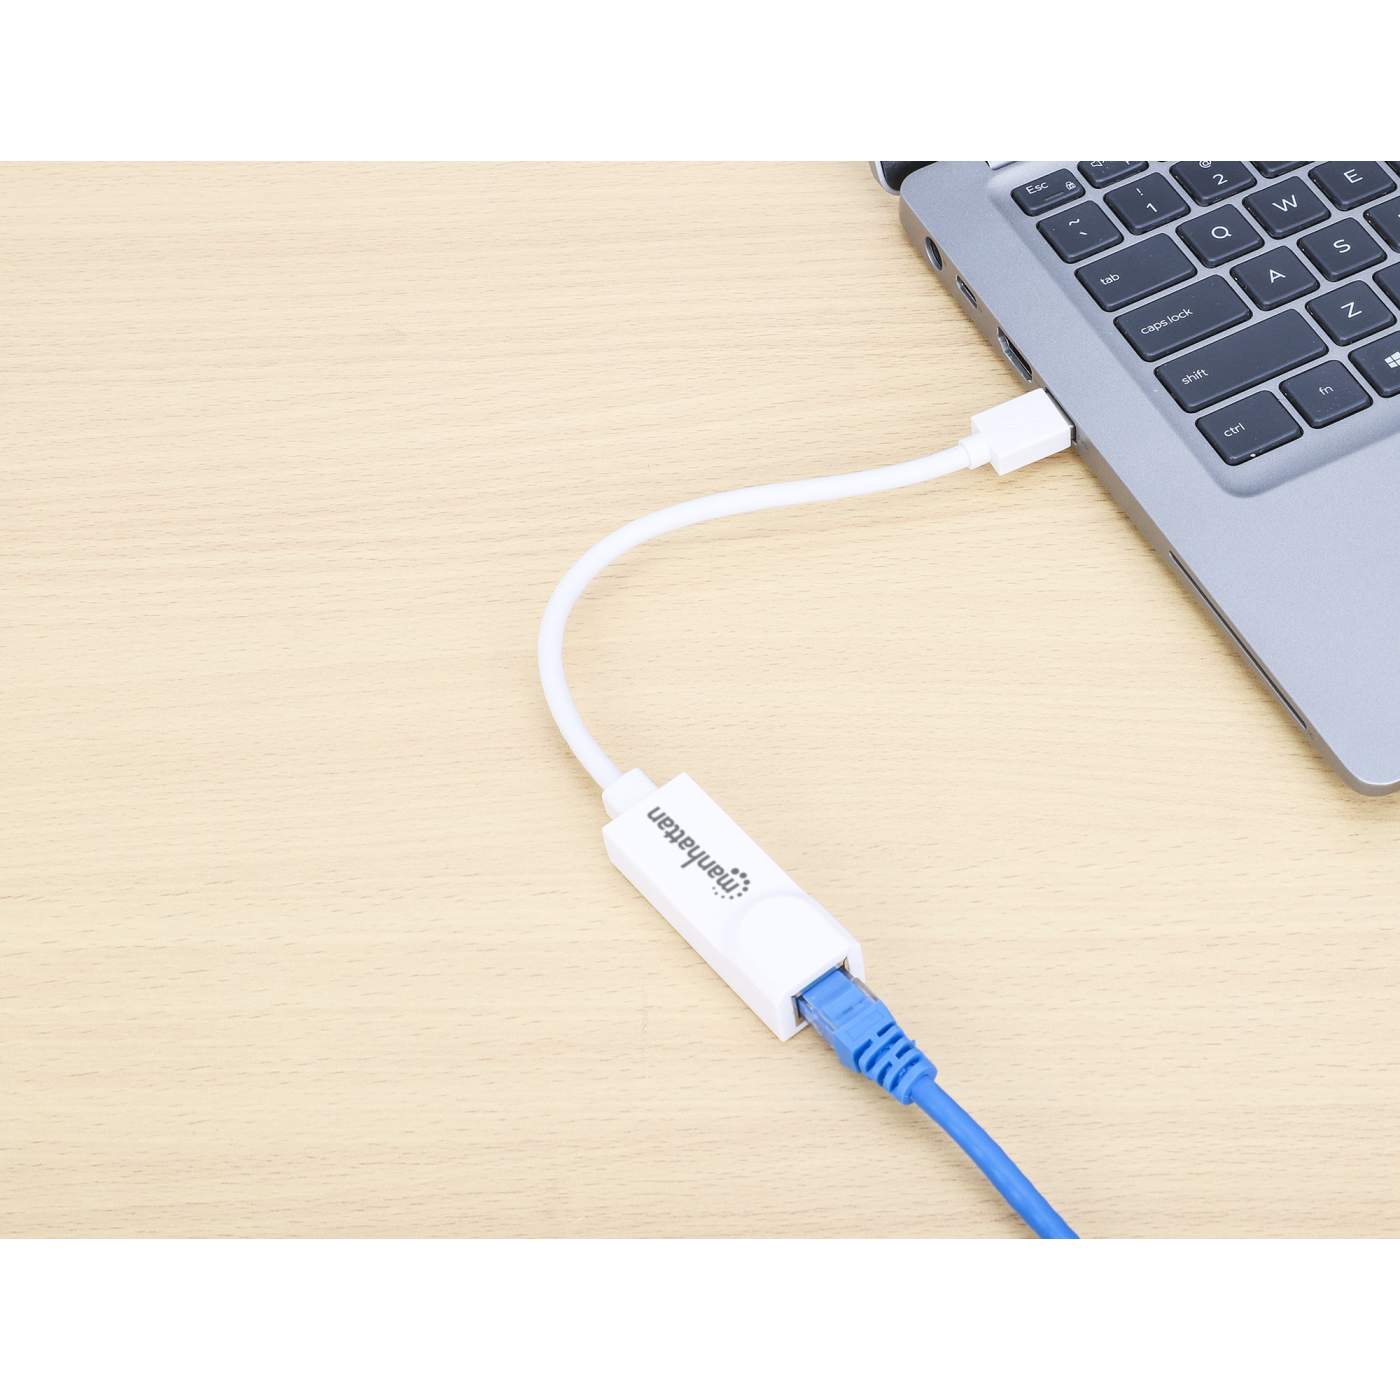 USB 3.0 to Gigabit Network Adapter Image 6